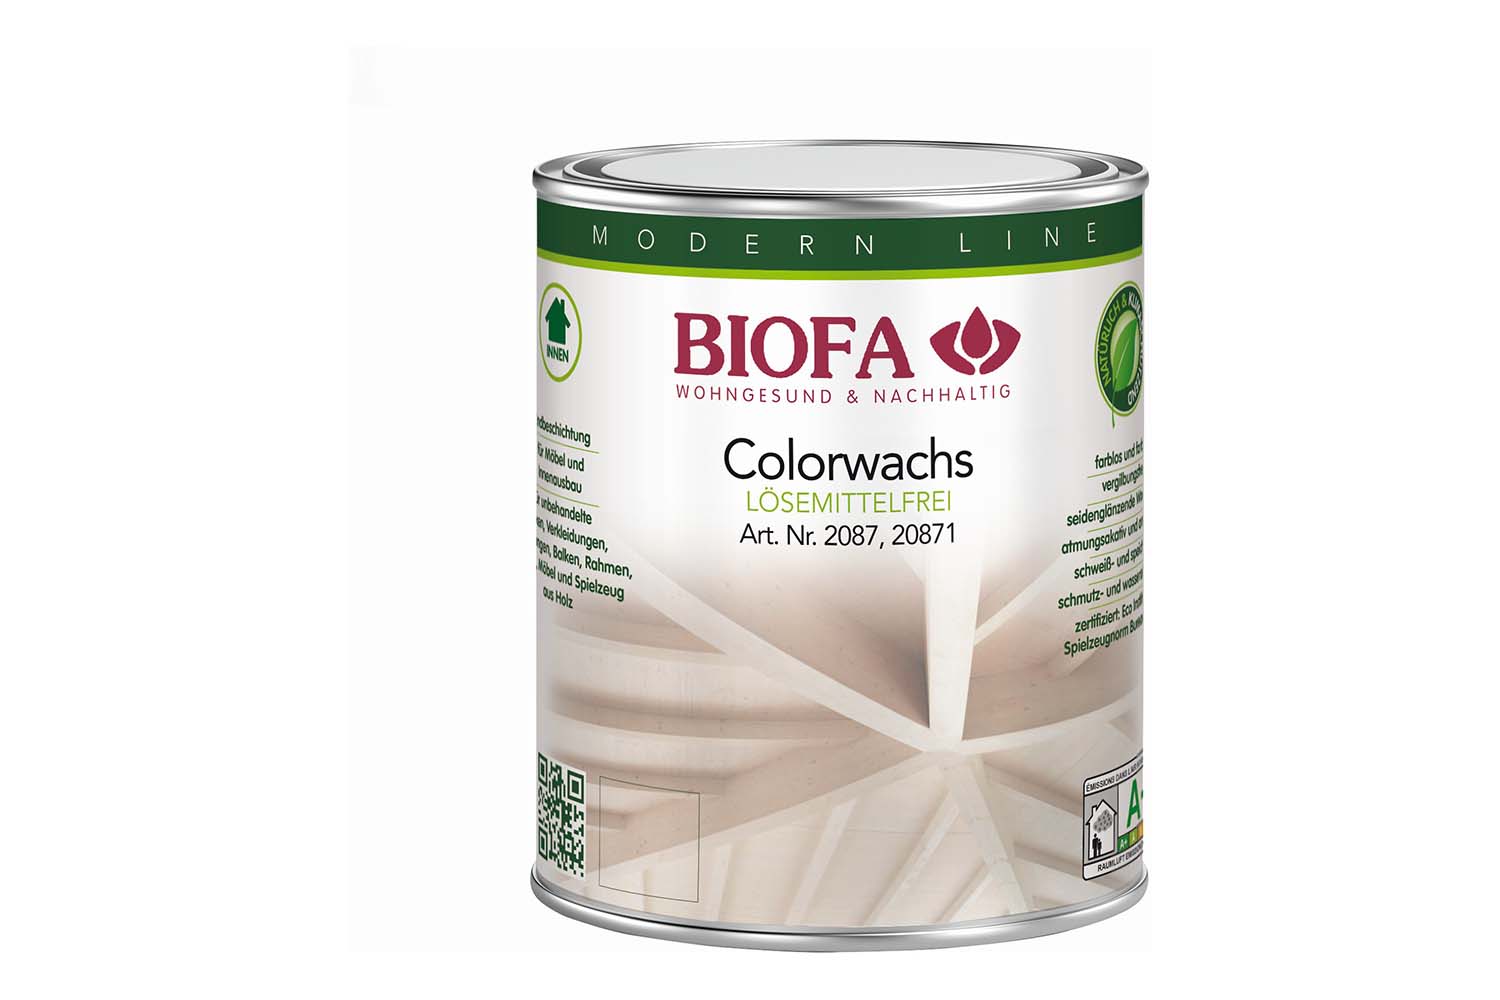 Biofa Colorwachs, lösemittelfrei